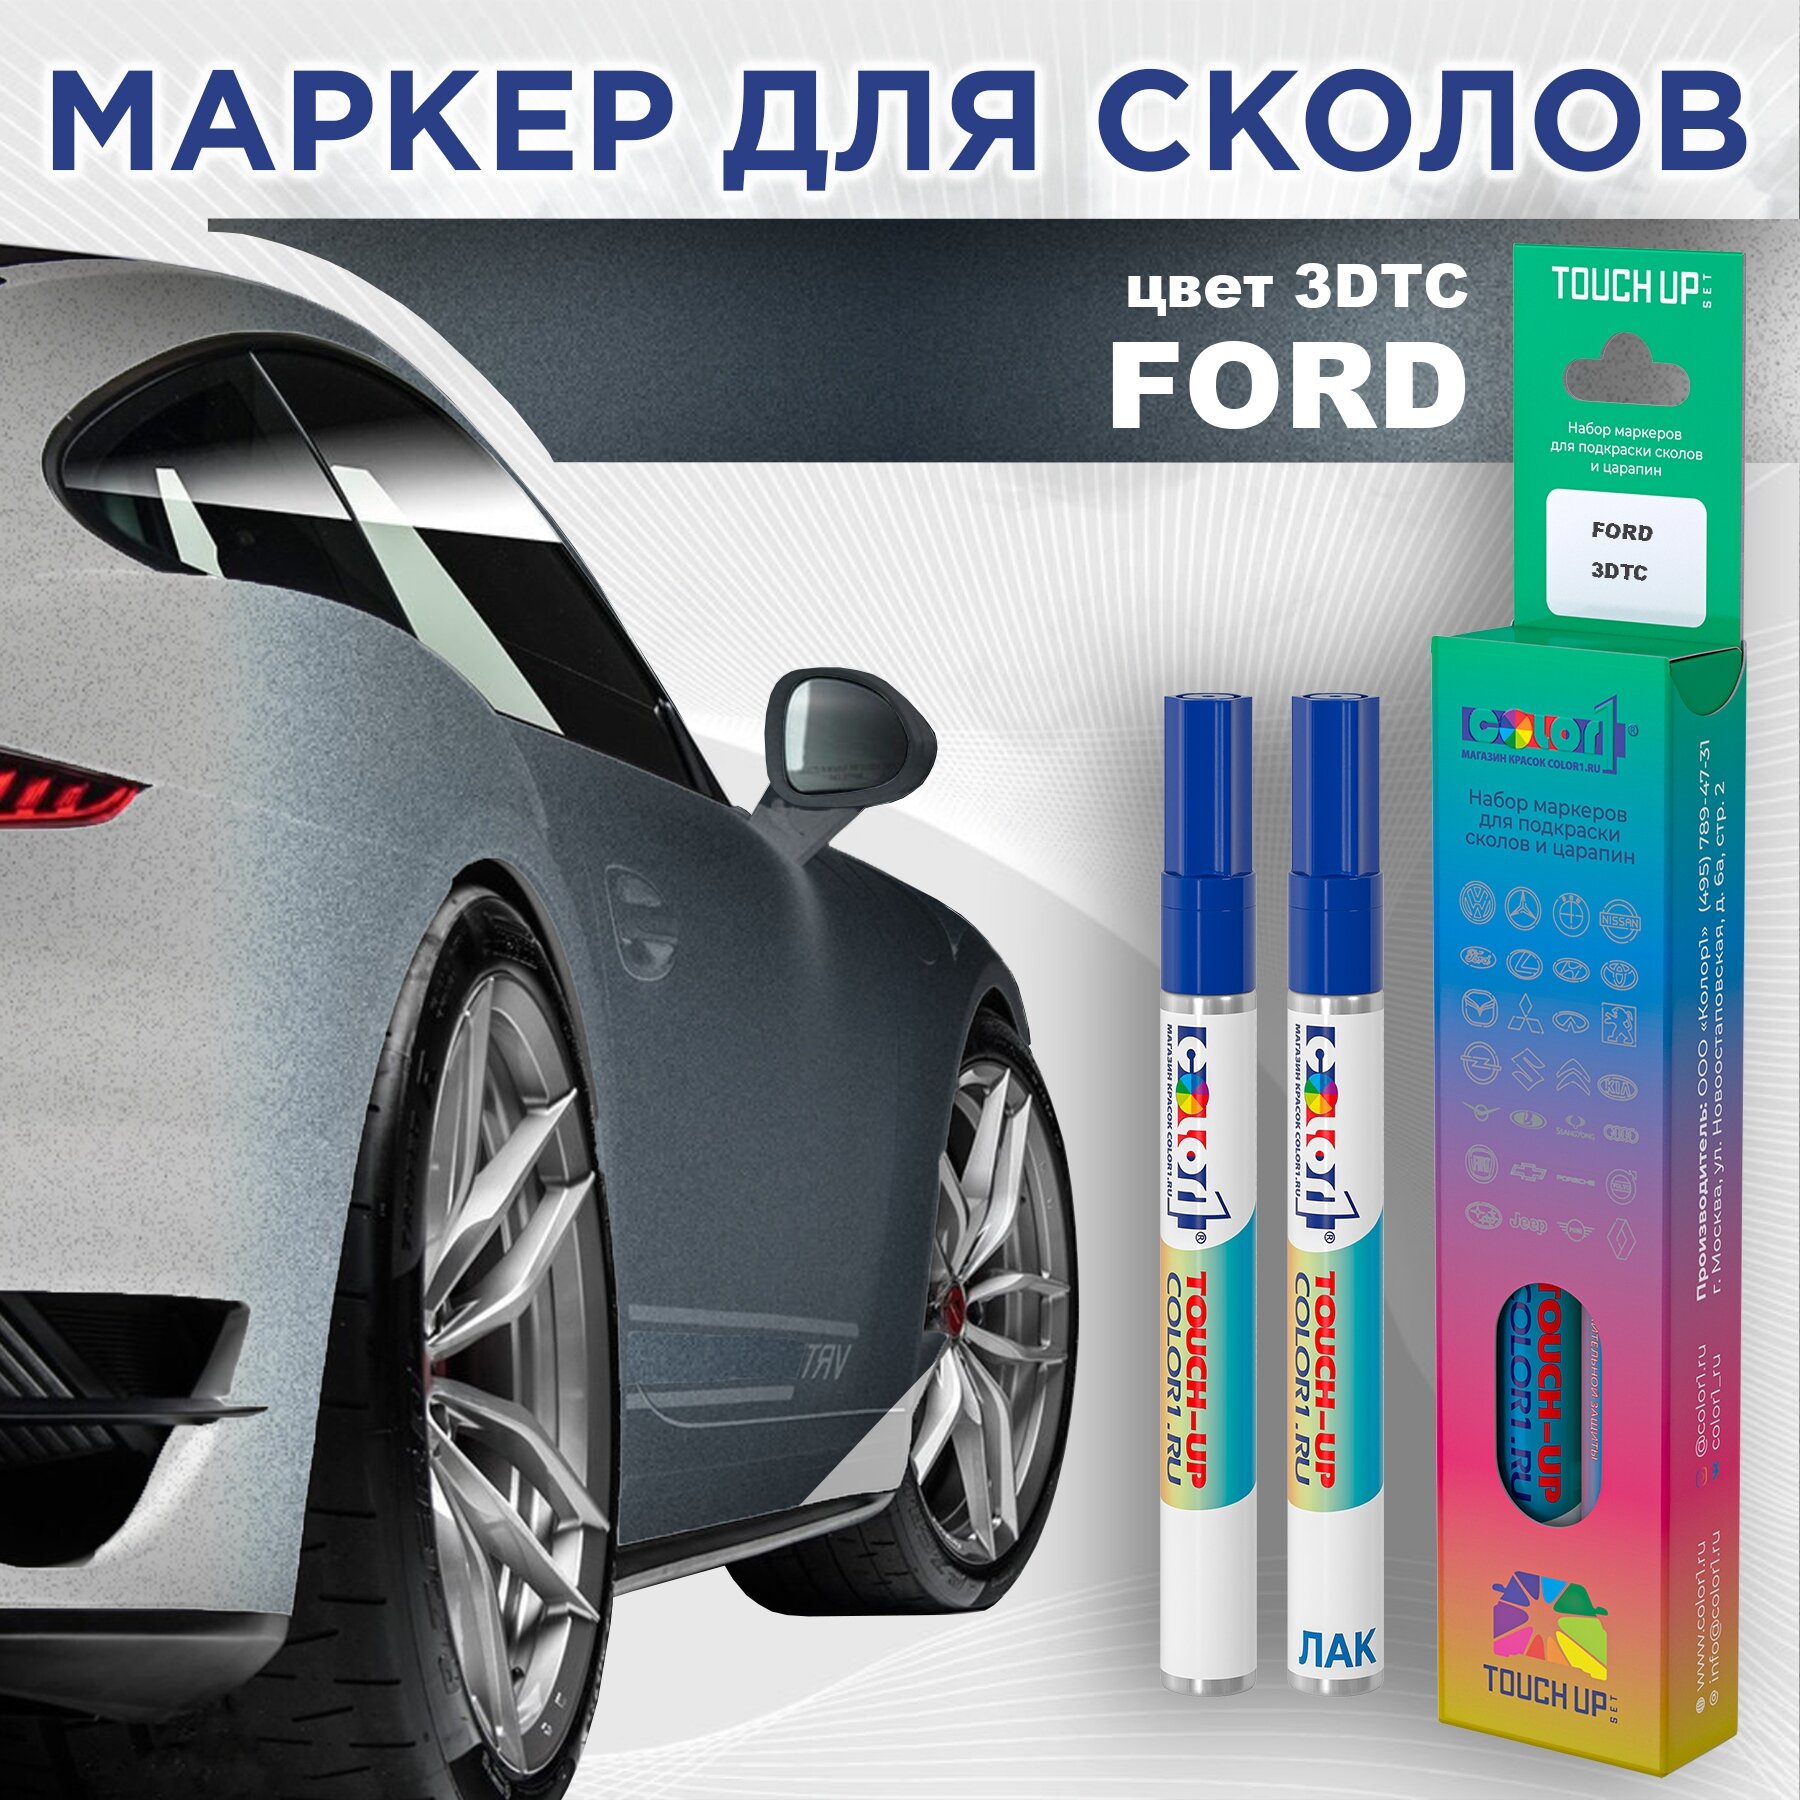 Набор маркеров (маркер с краской и маркер с лаком) для закраски сколов и царапин на автомобиле FORD, цвет 3DTC - TONIC BLUE